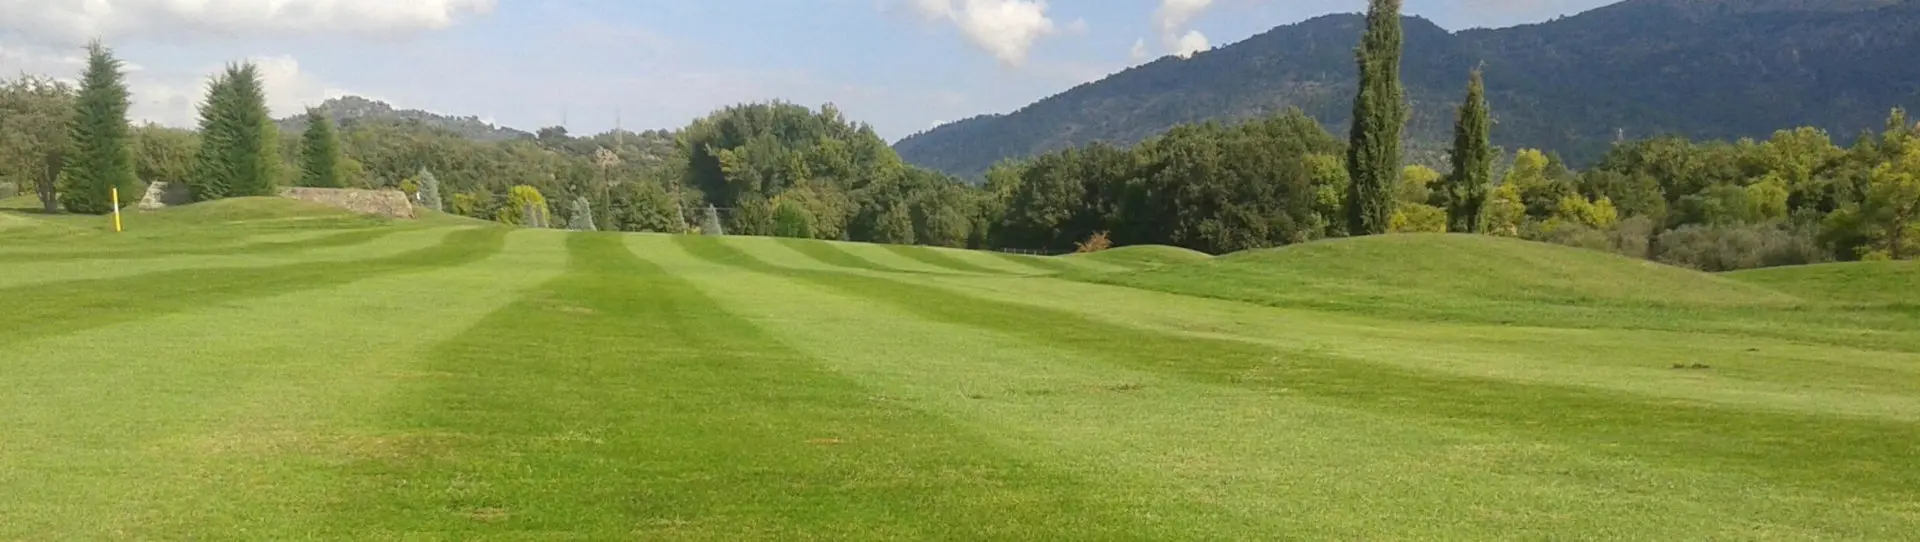 Spain golf courses - Navaluenga Golf Course - Photo 1